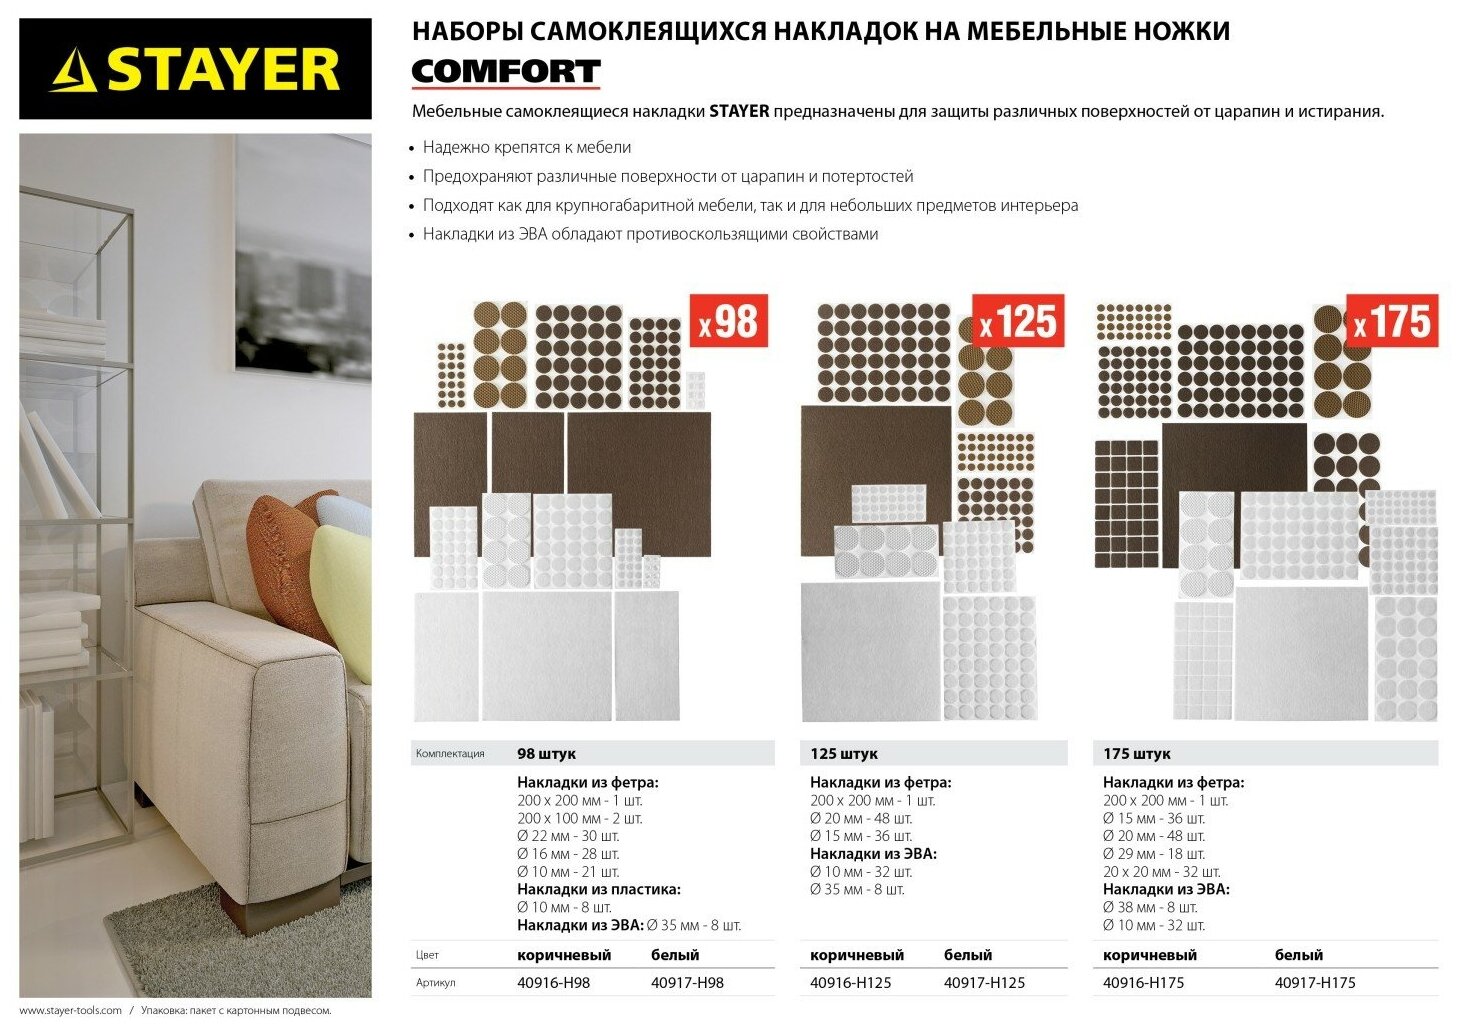 STAYER белый, самоклеящихся, 125 шт, набор мебельных накладок (40917-H125)